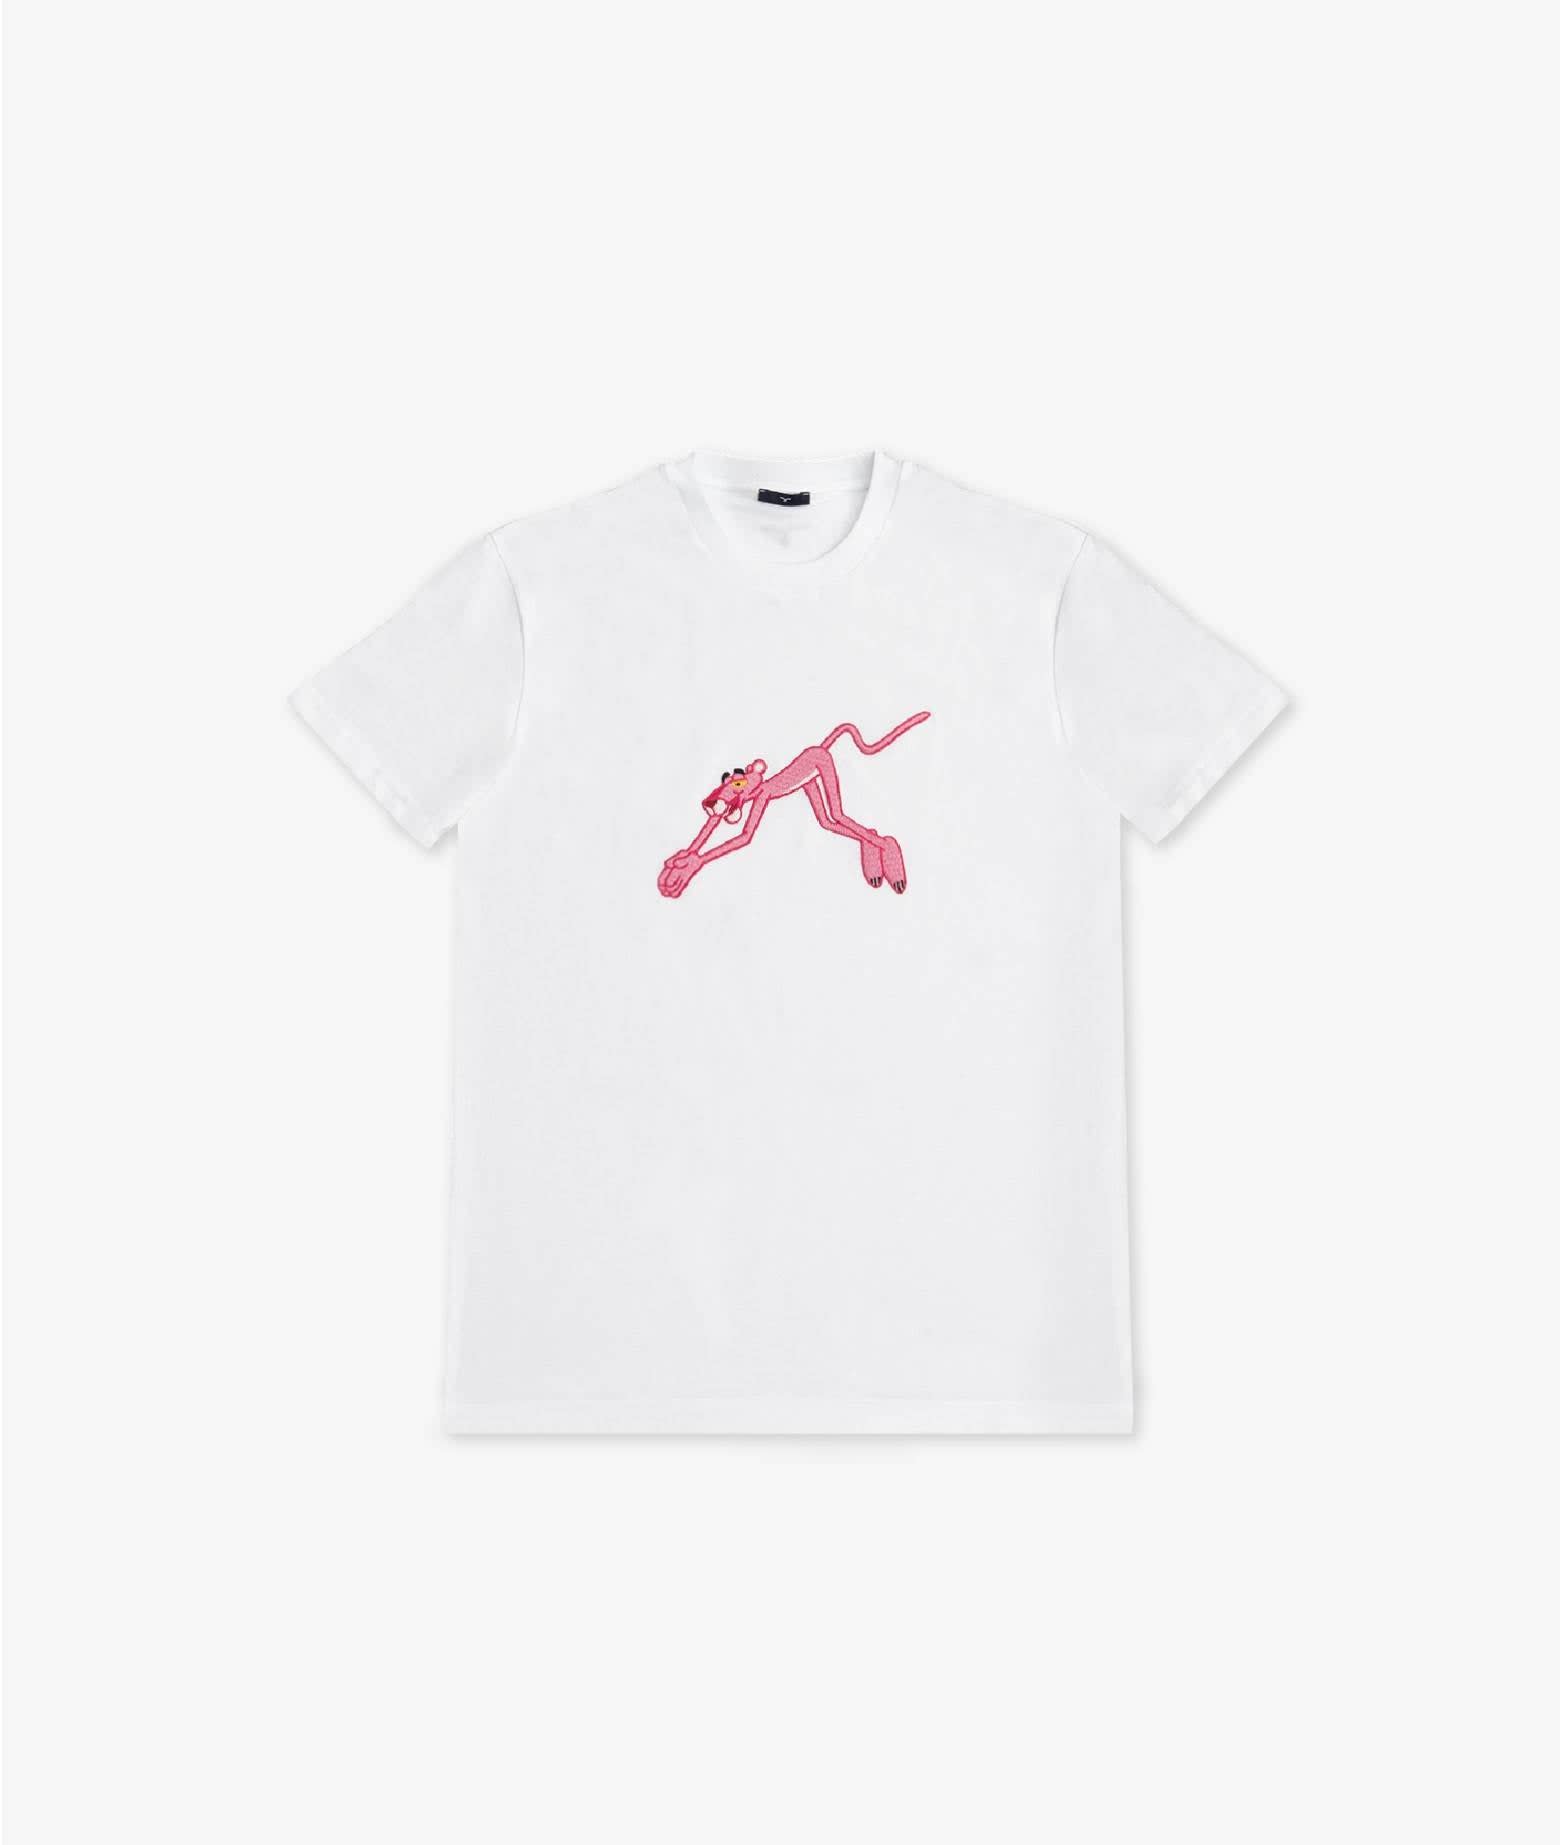 Larusmiani T-shirt Pink Trouserher T-shirt In White